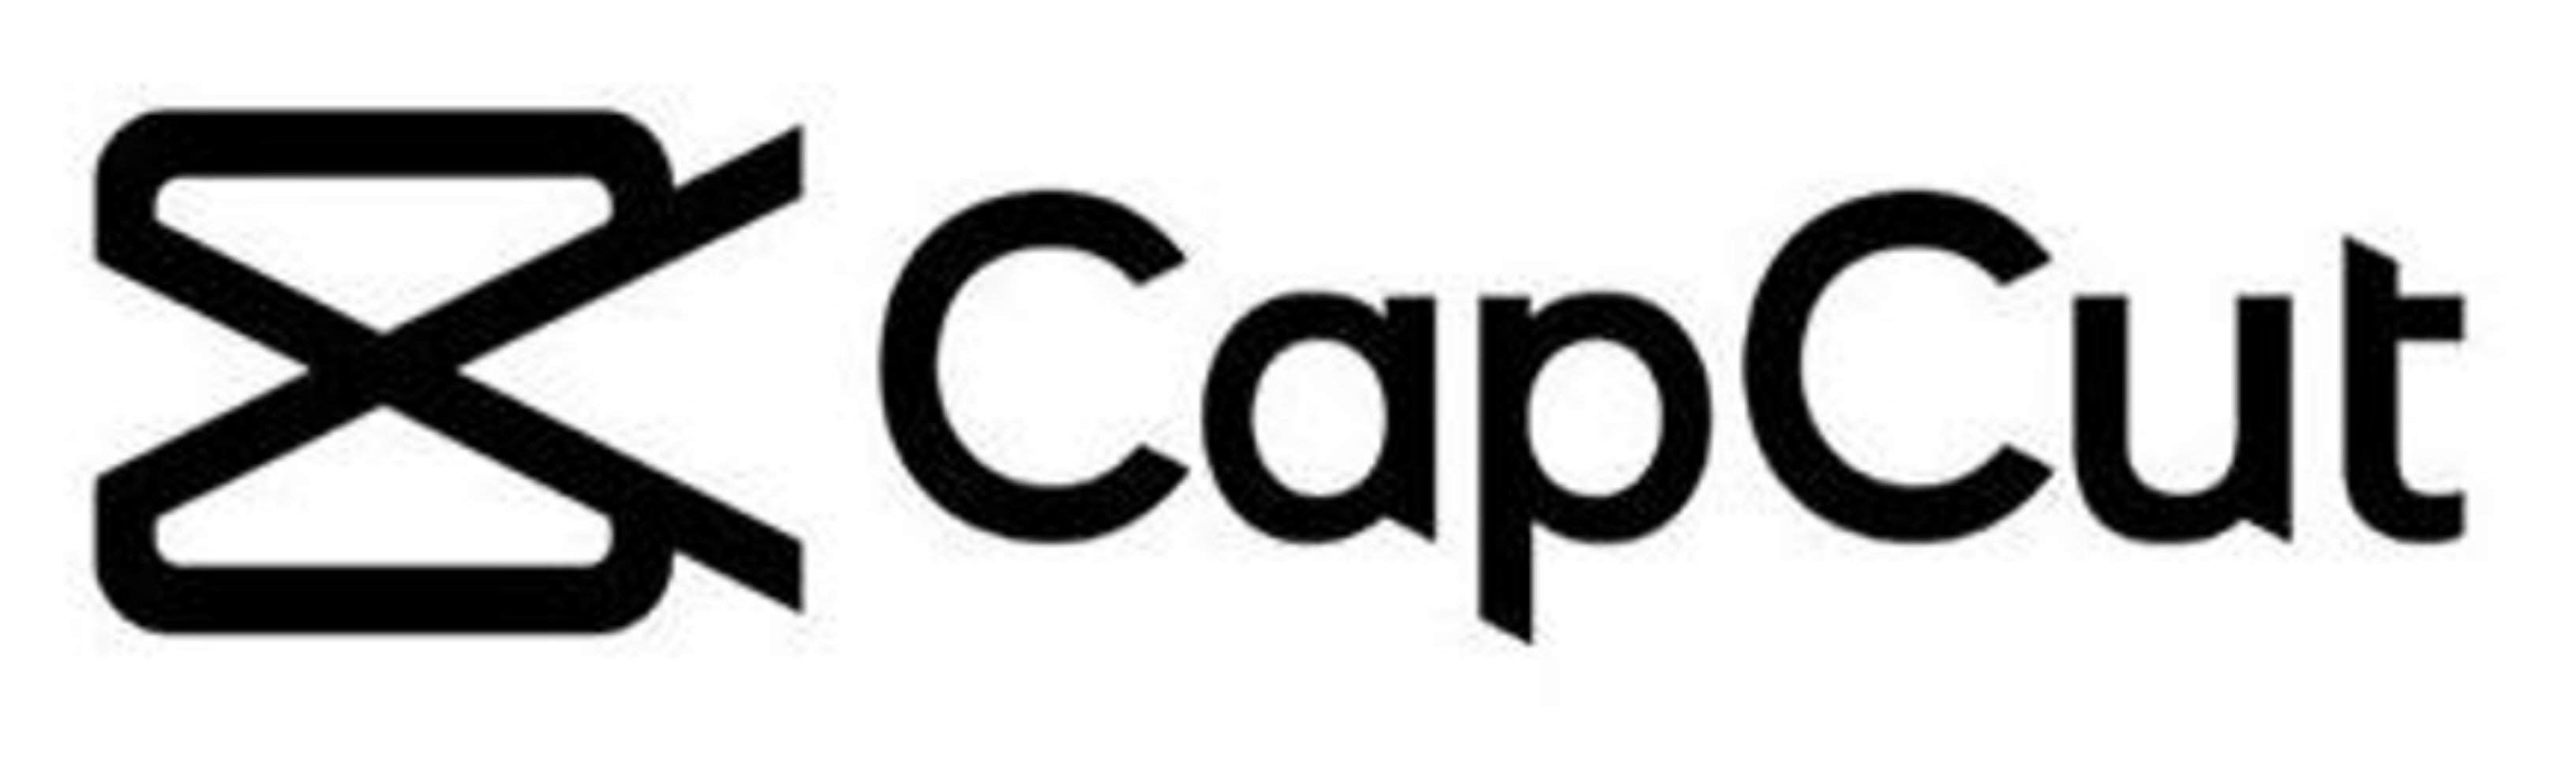 Capcut музыка. CAPCUT logo. CAPCUT лого. Значок CAPCUT на прозрачном фоне. CAPCUT без фона.